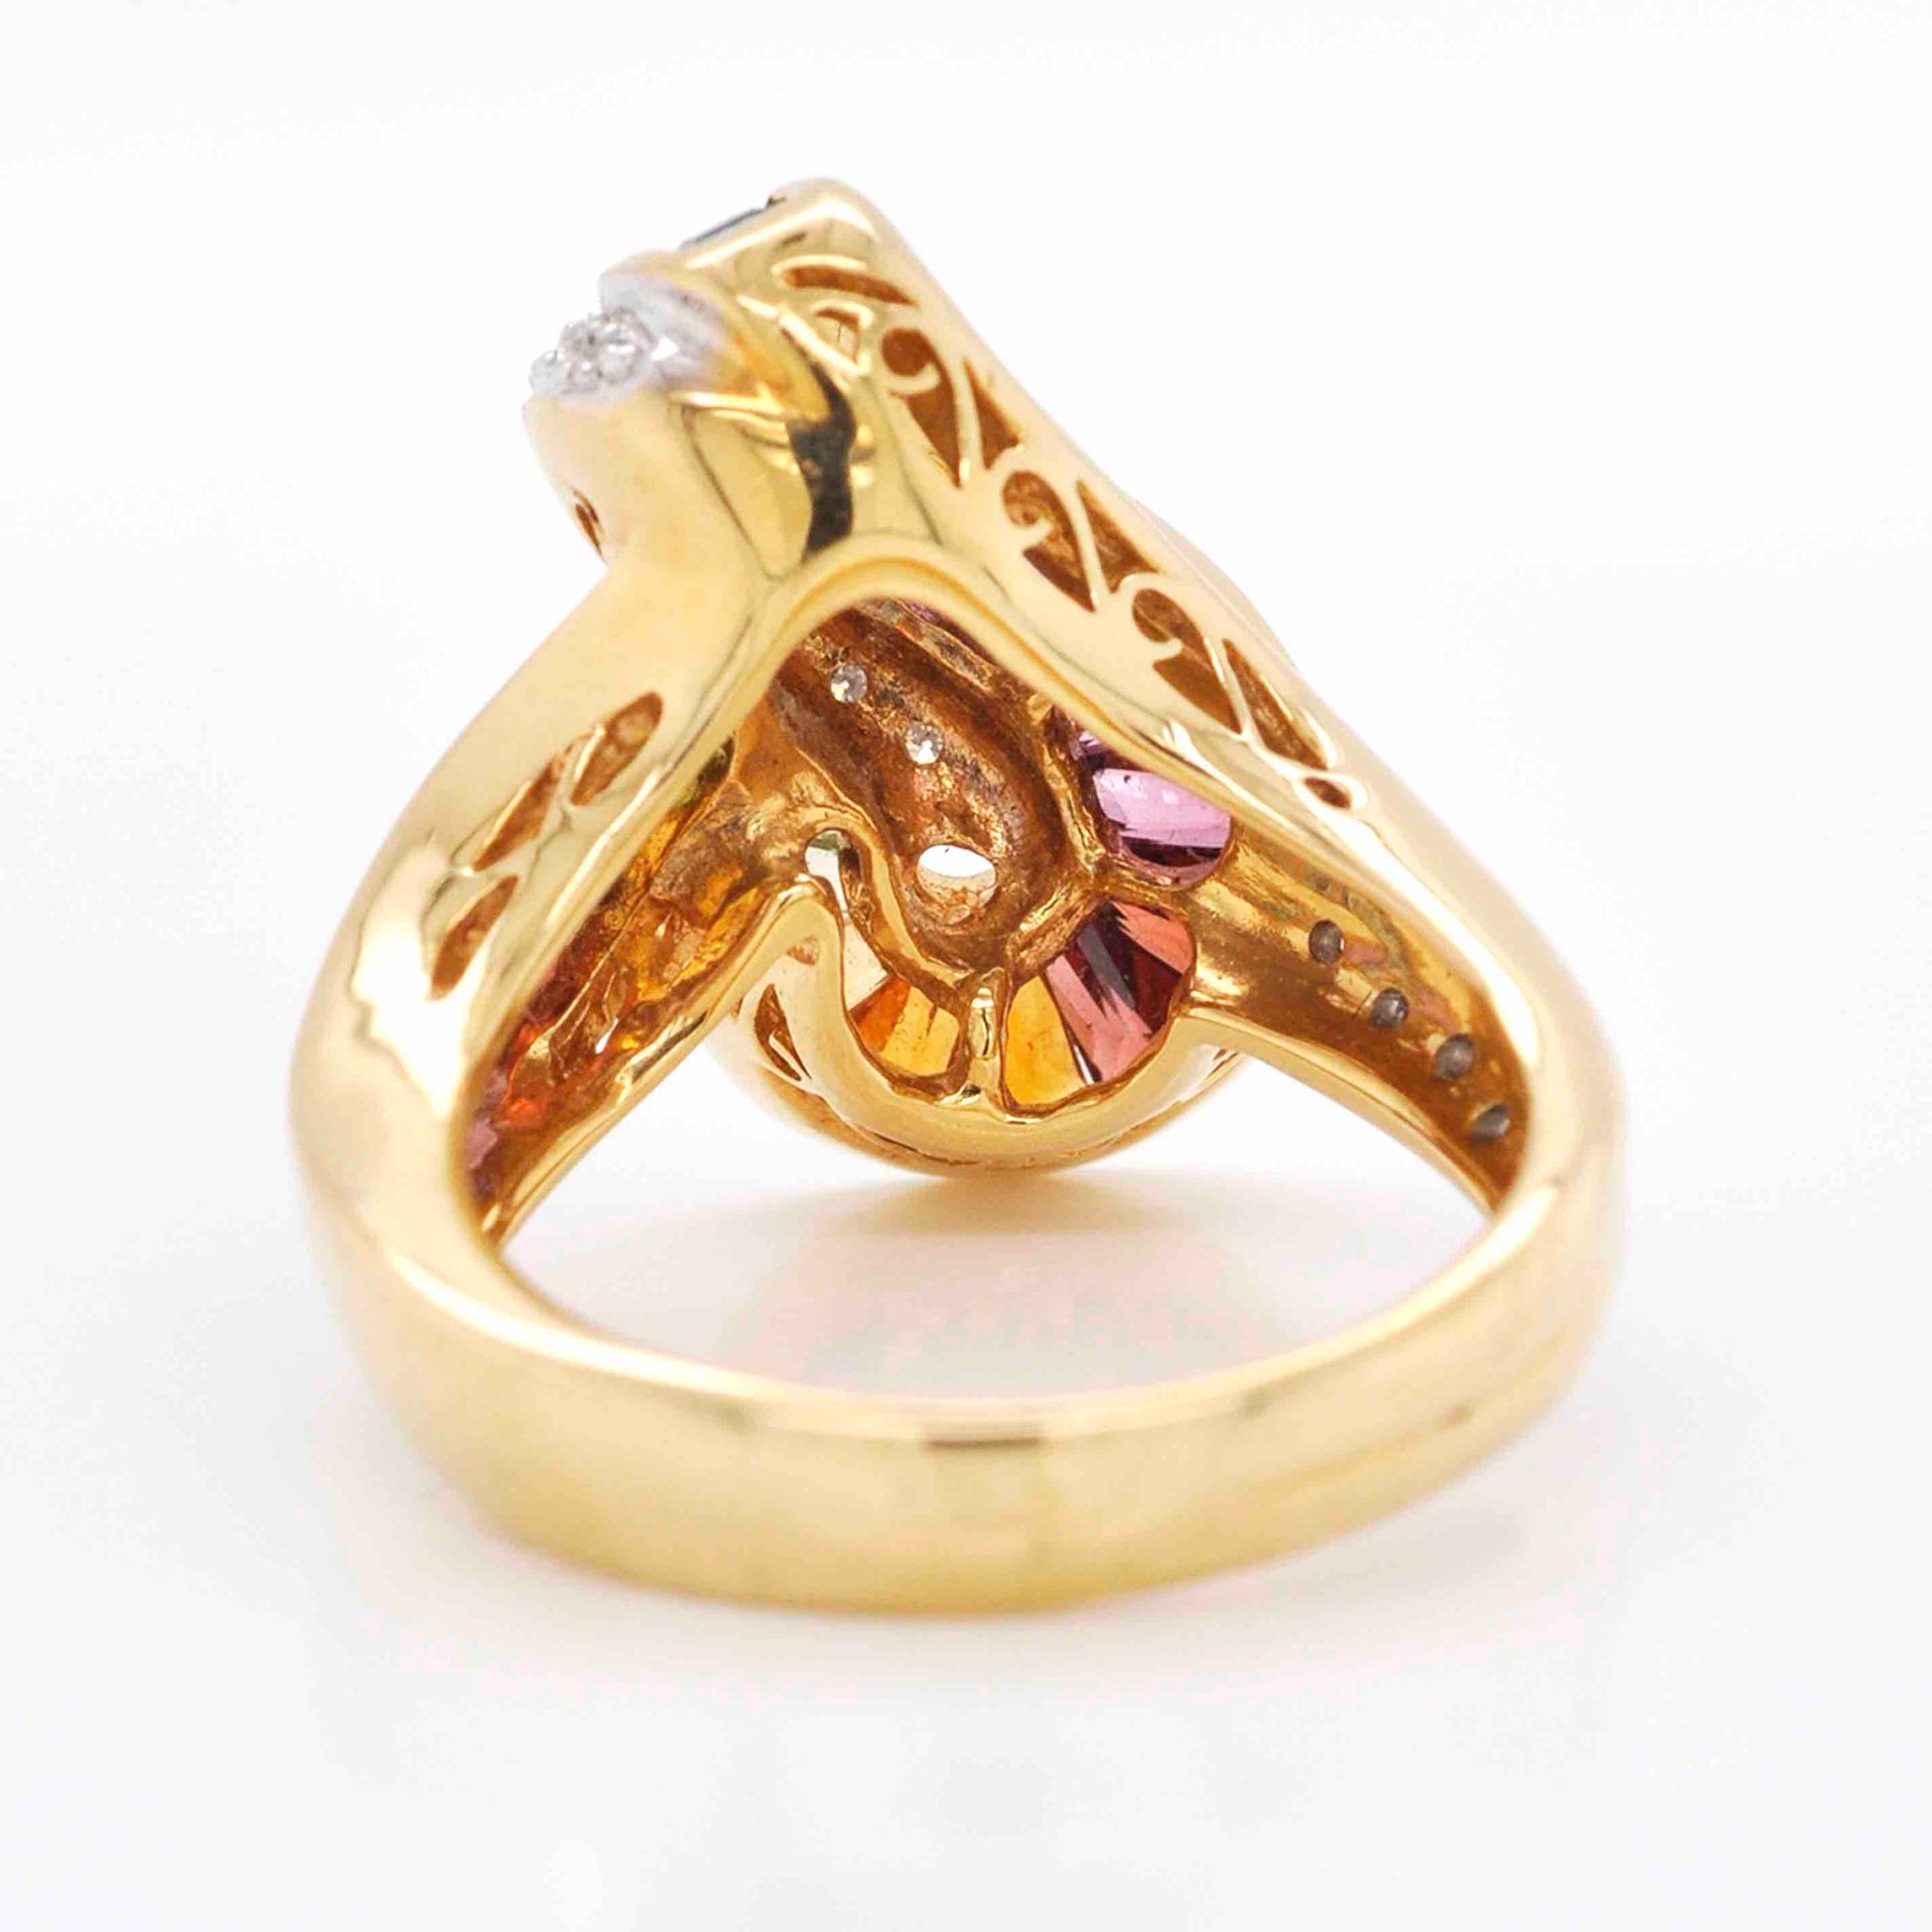 18K Gold Swirl Channel-Set Rainbow Gemstones Diamond Ring - Vaibhav Dhadda Jewelry